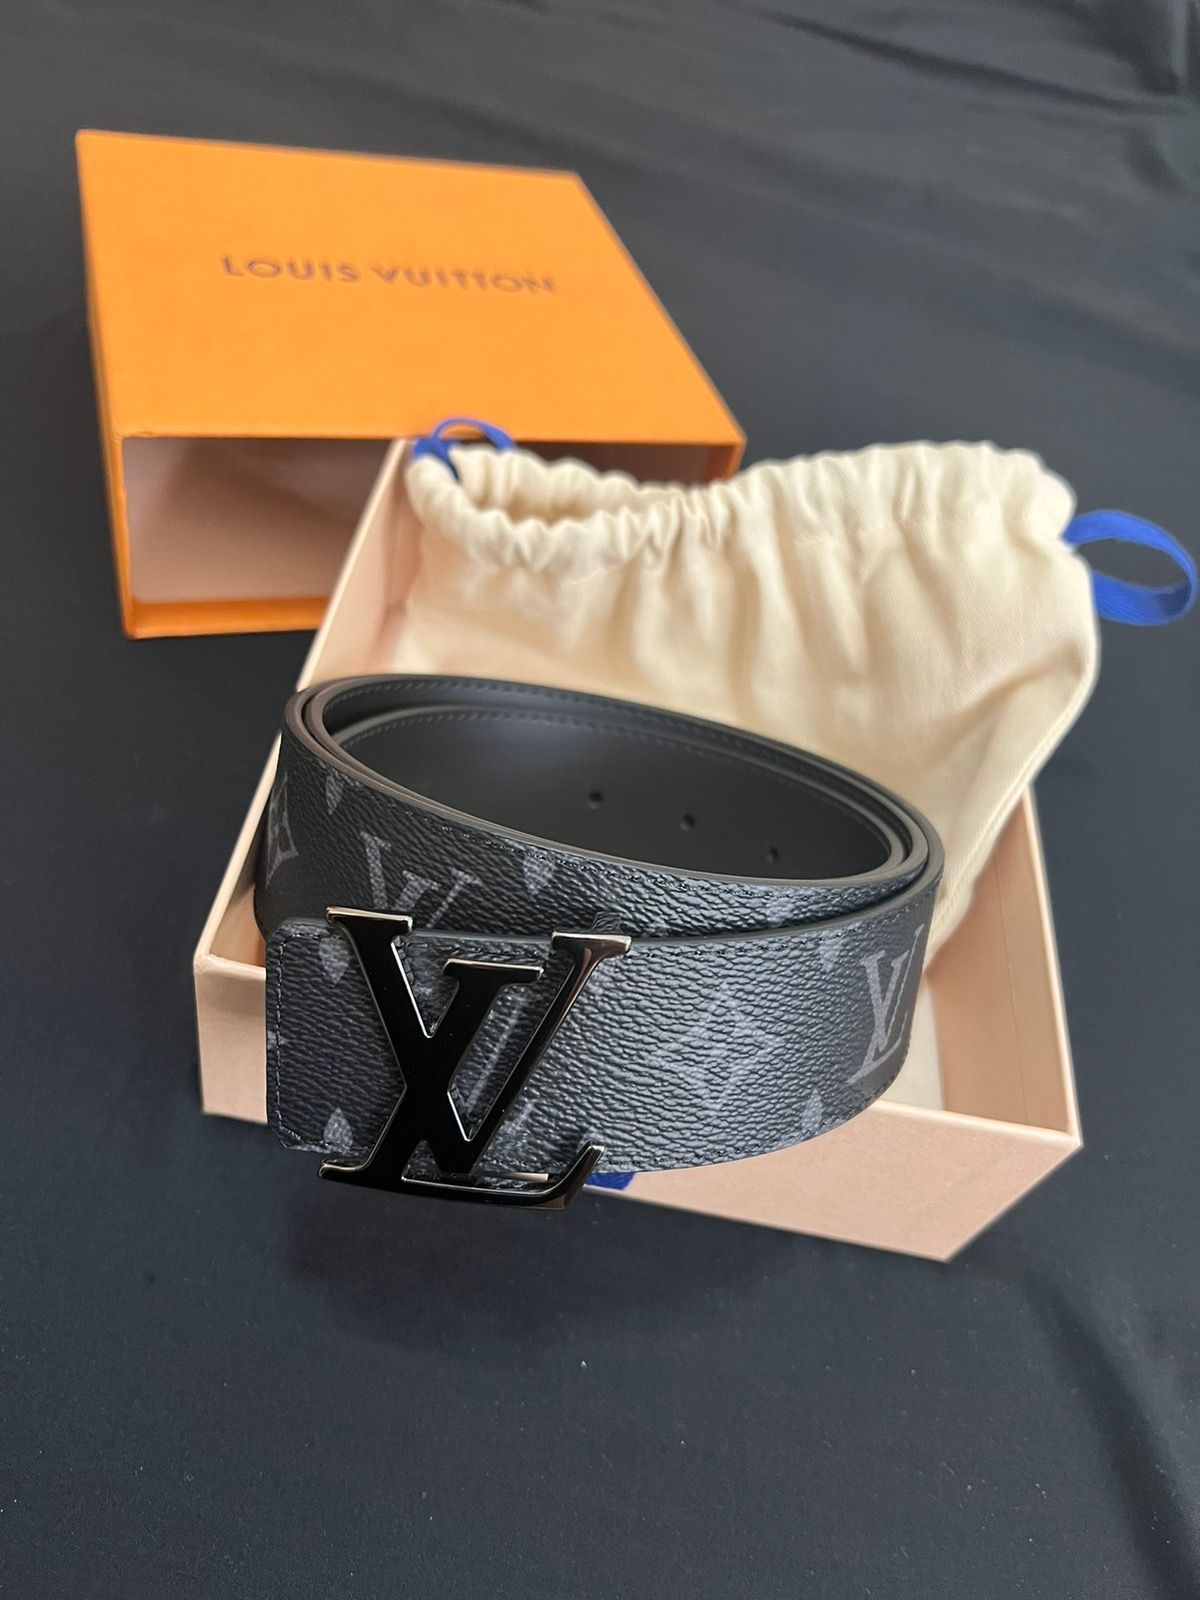 Louis Vuitton Lv Initials 40Mm Reversible Belt (M0464V, M0463V)